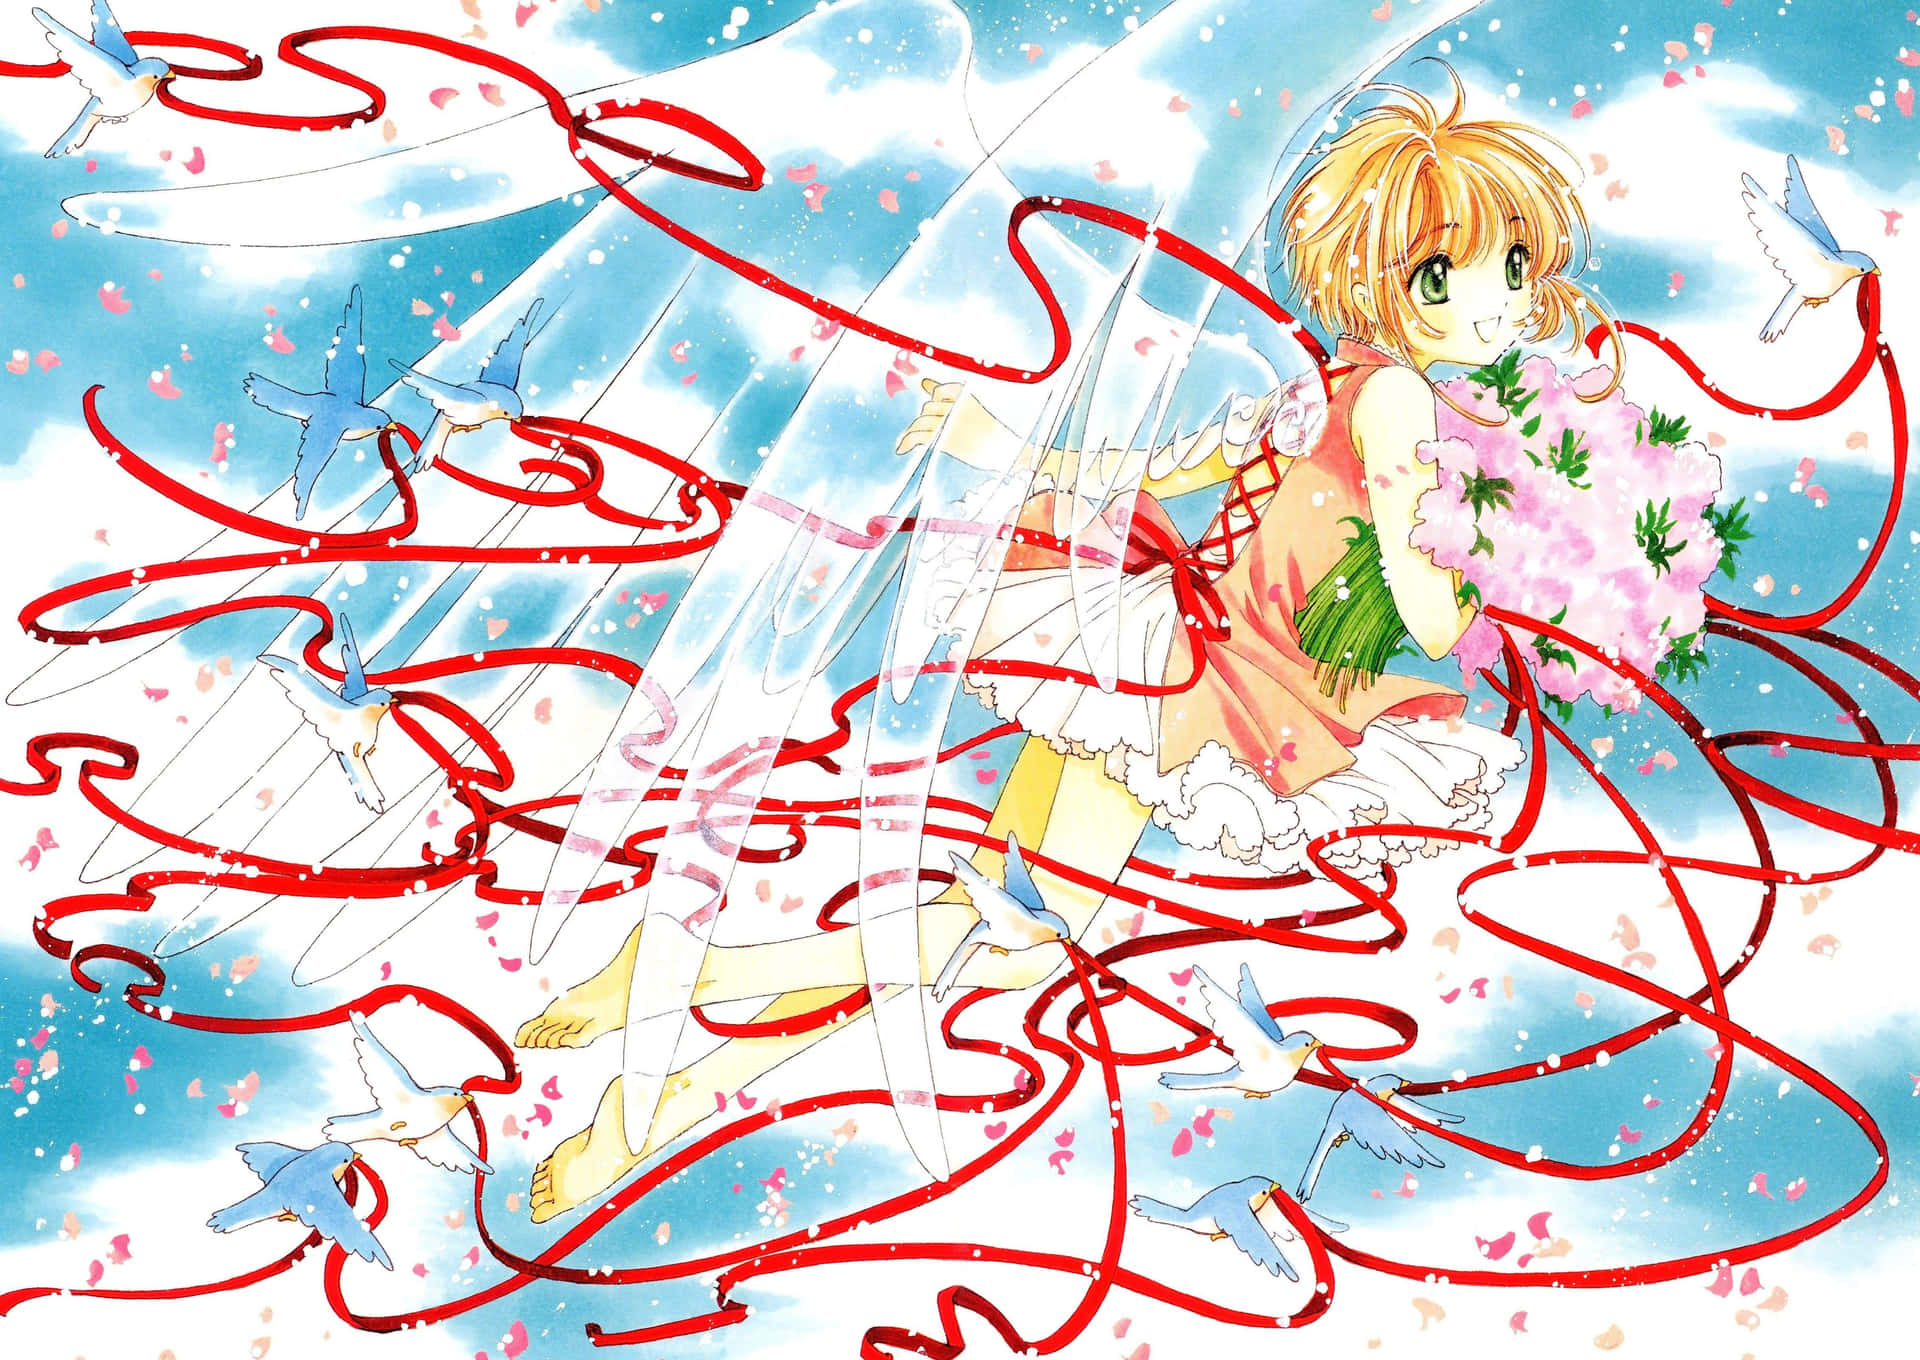 Follow the Clow Cards on Cardcaptor Sakura's journey!